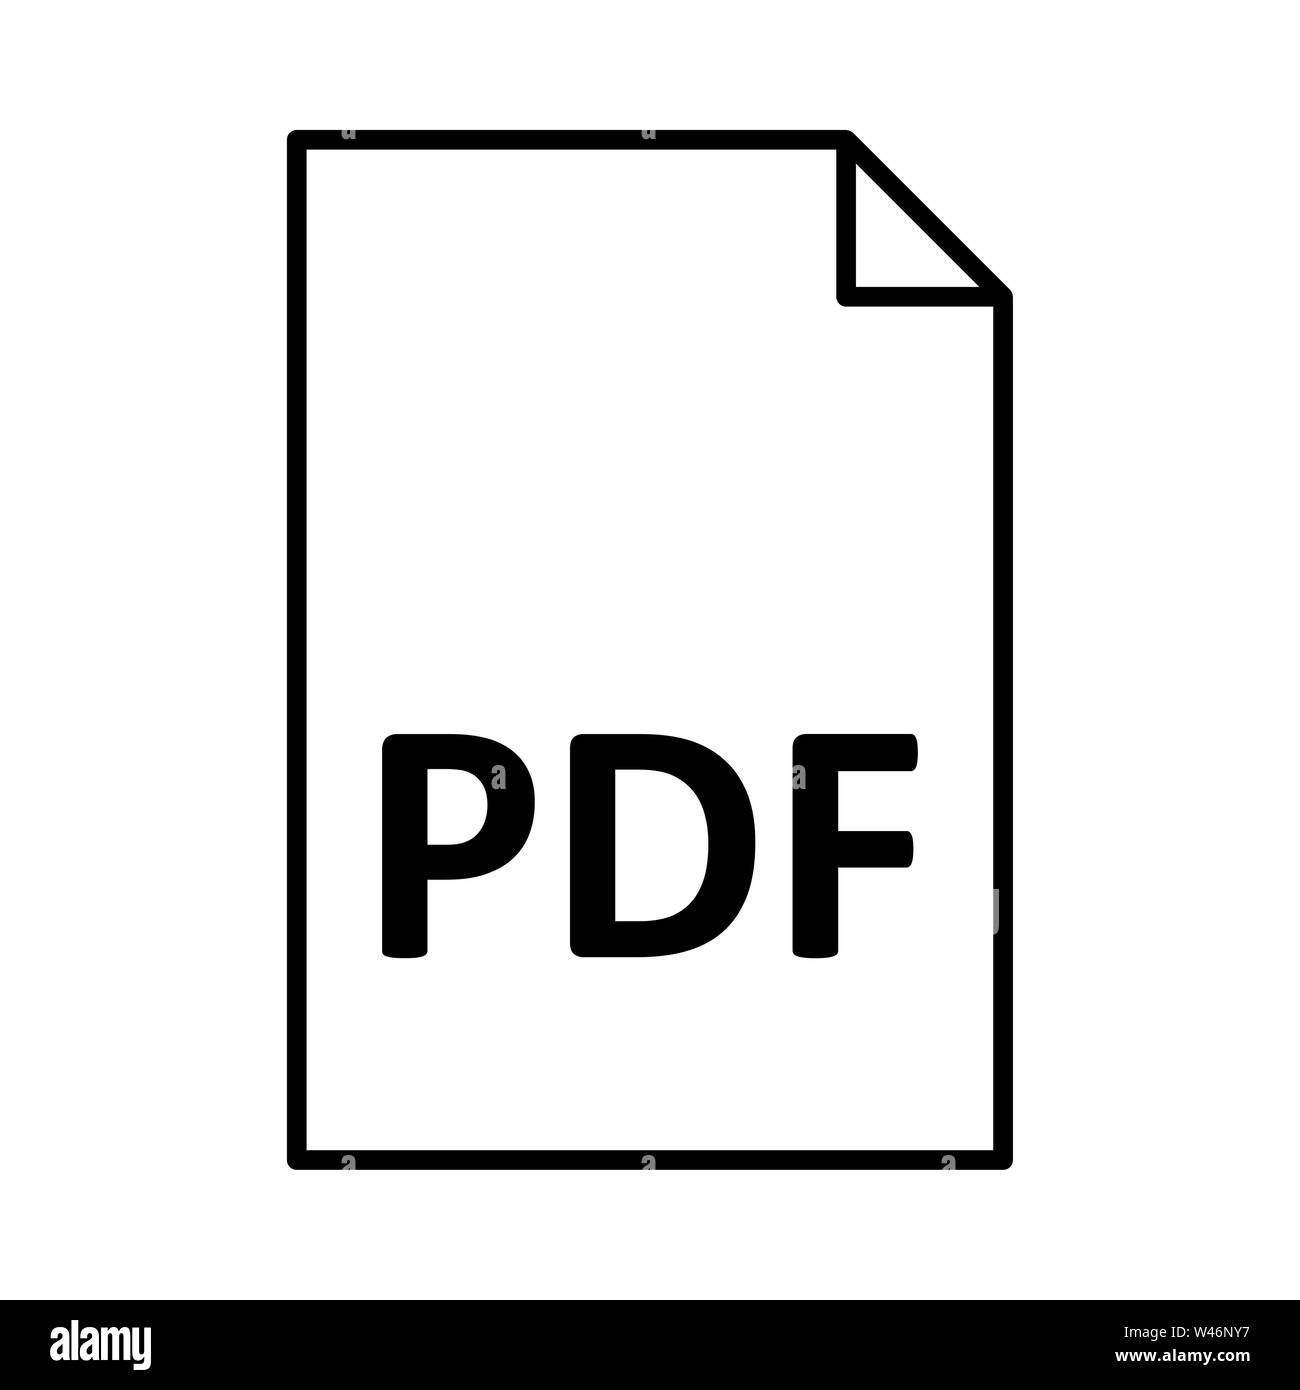 pdfcreator logo